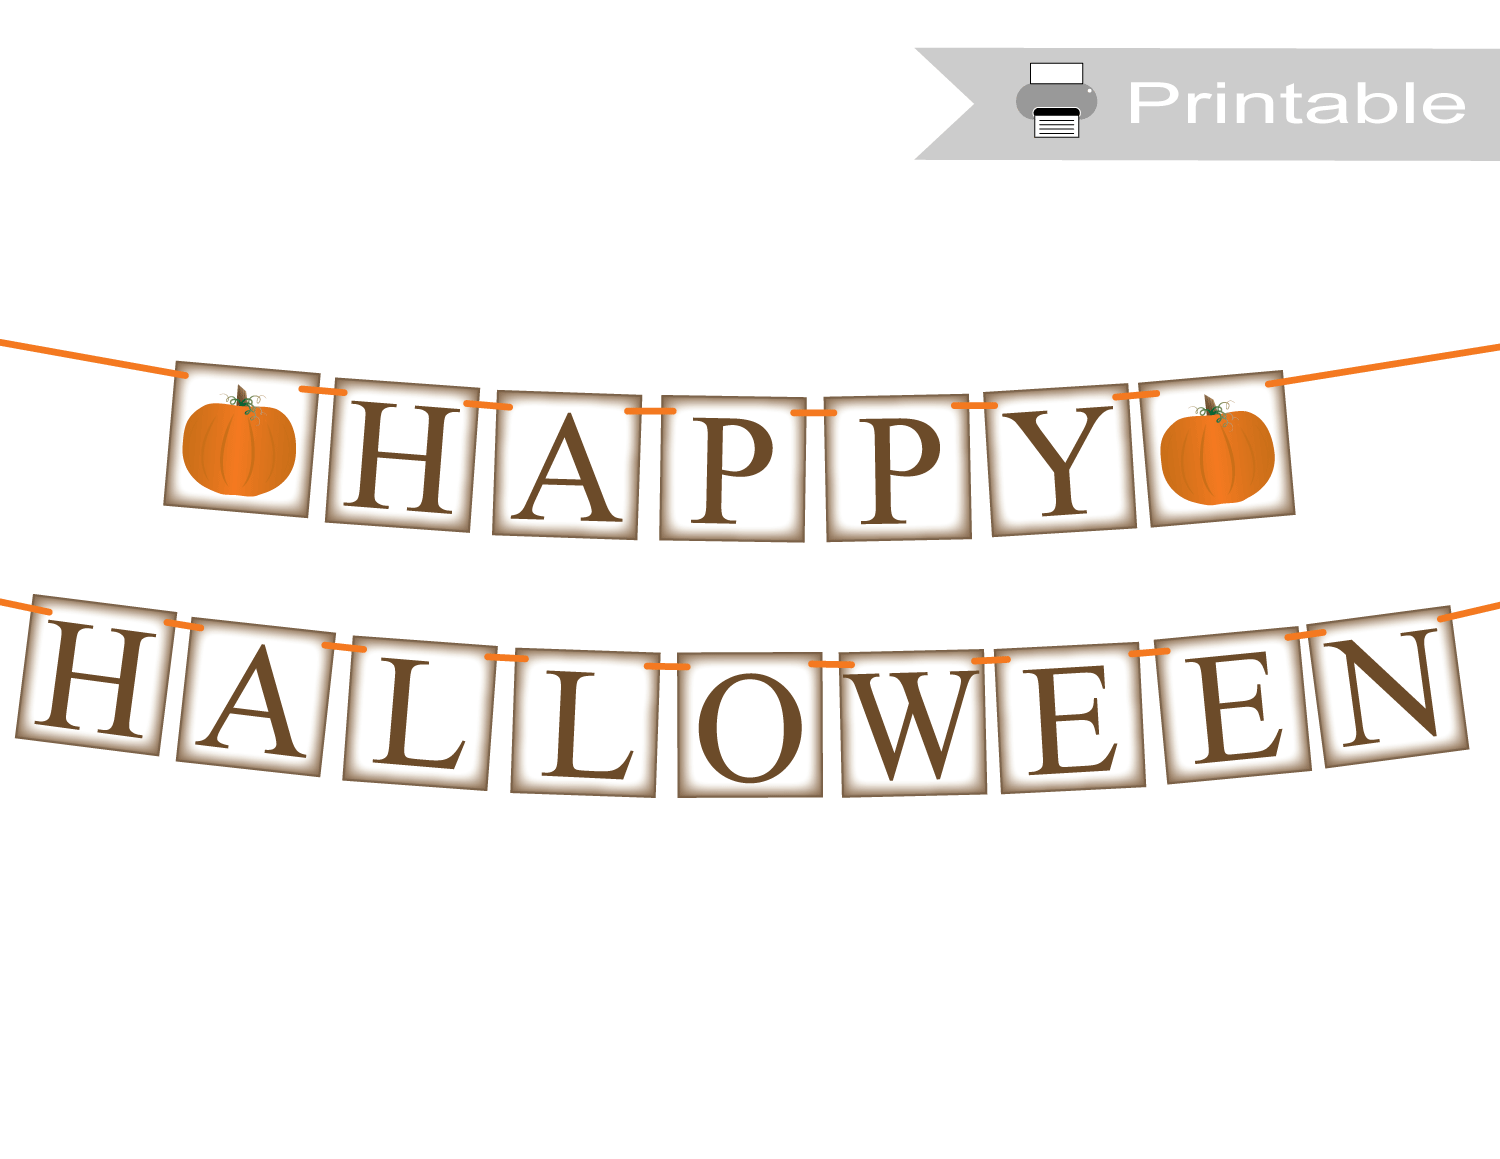 printable rustic happy halloween banner - Celebrating Together